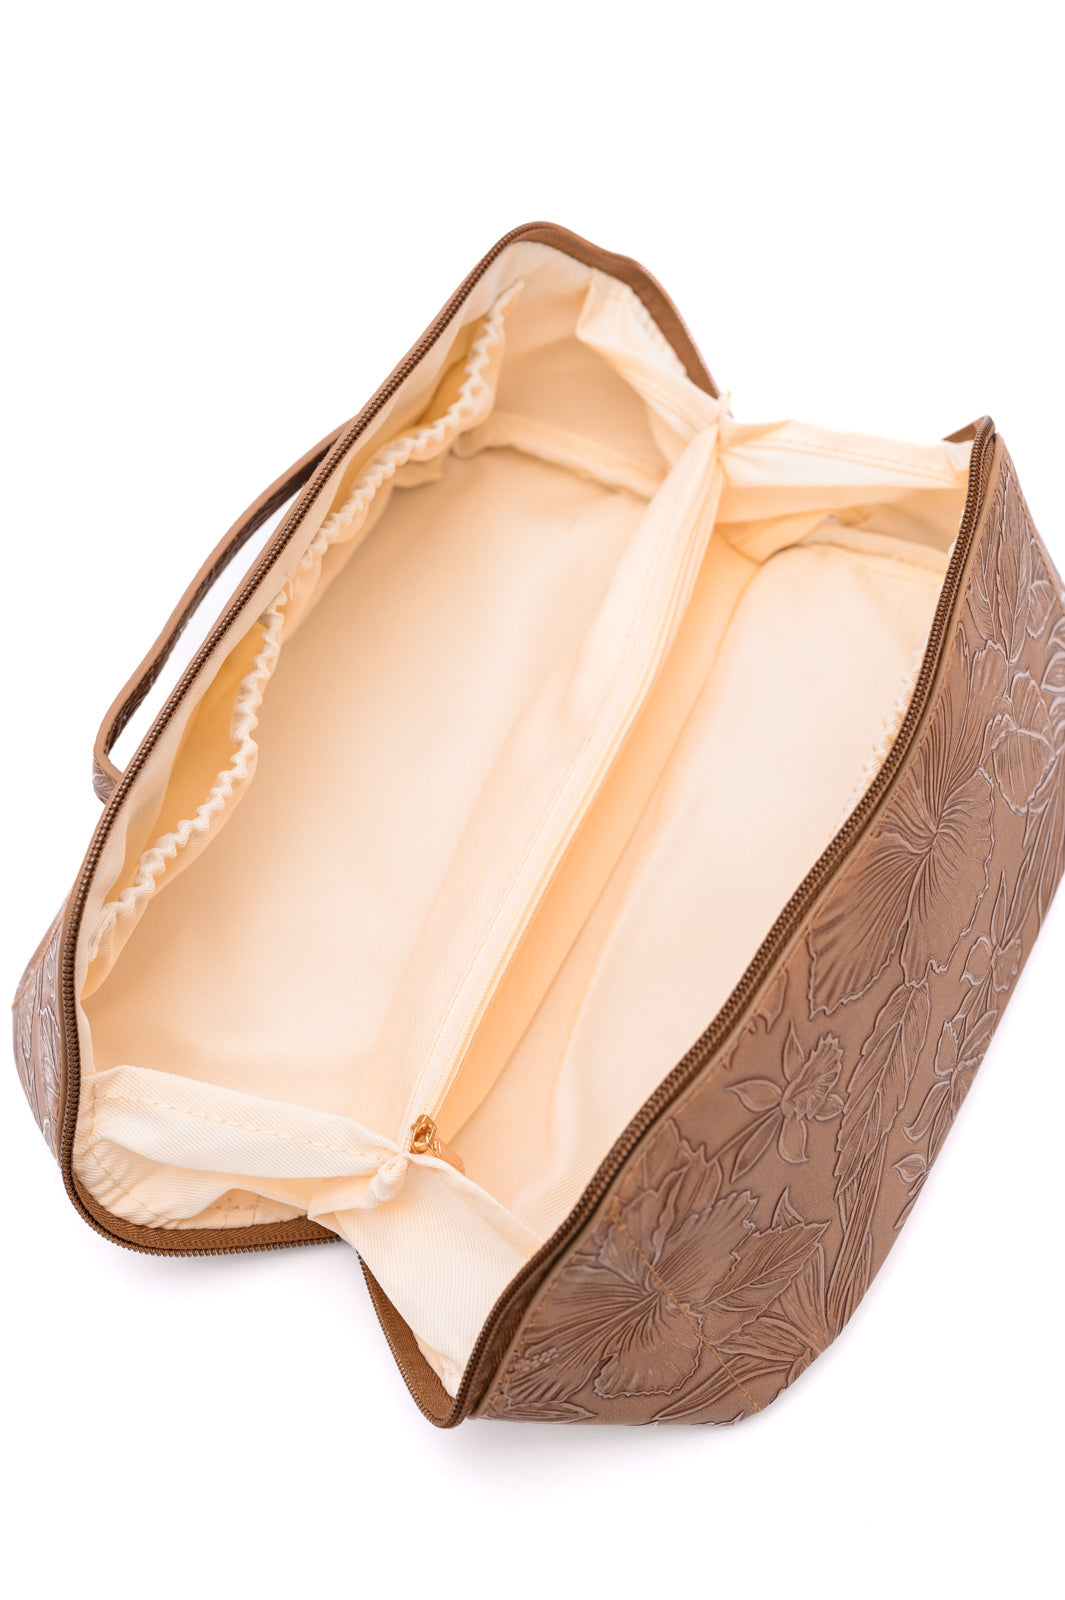 Floral Embossed Large Capacity Cosmetic Bag in Cream